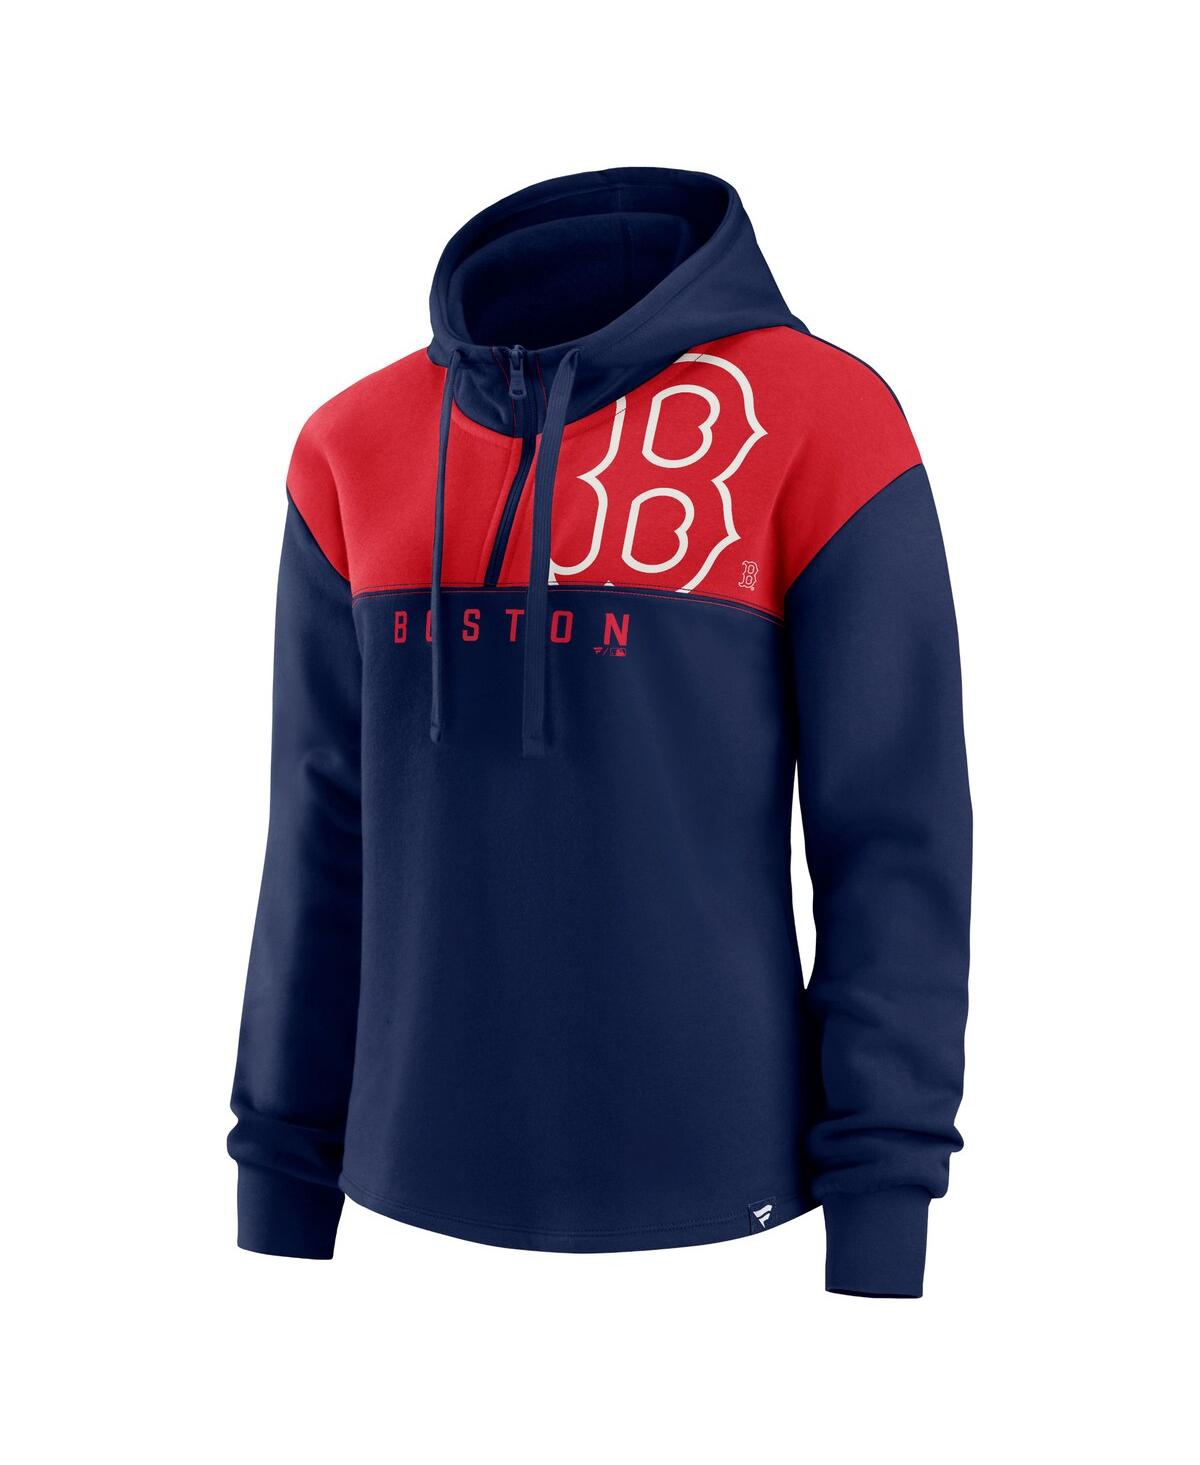 Shop Fanatics Women's  Navy Boston Red Sox Iconic Overslide Color-block Quarter-zip Hoodie